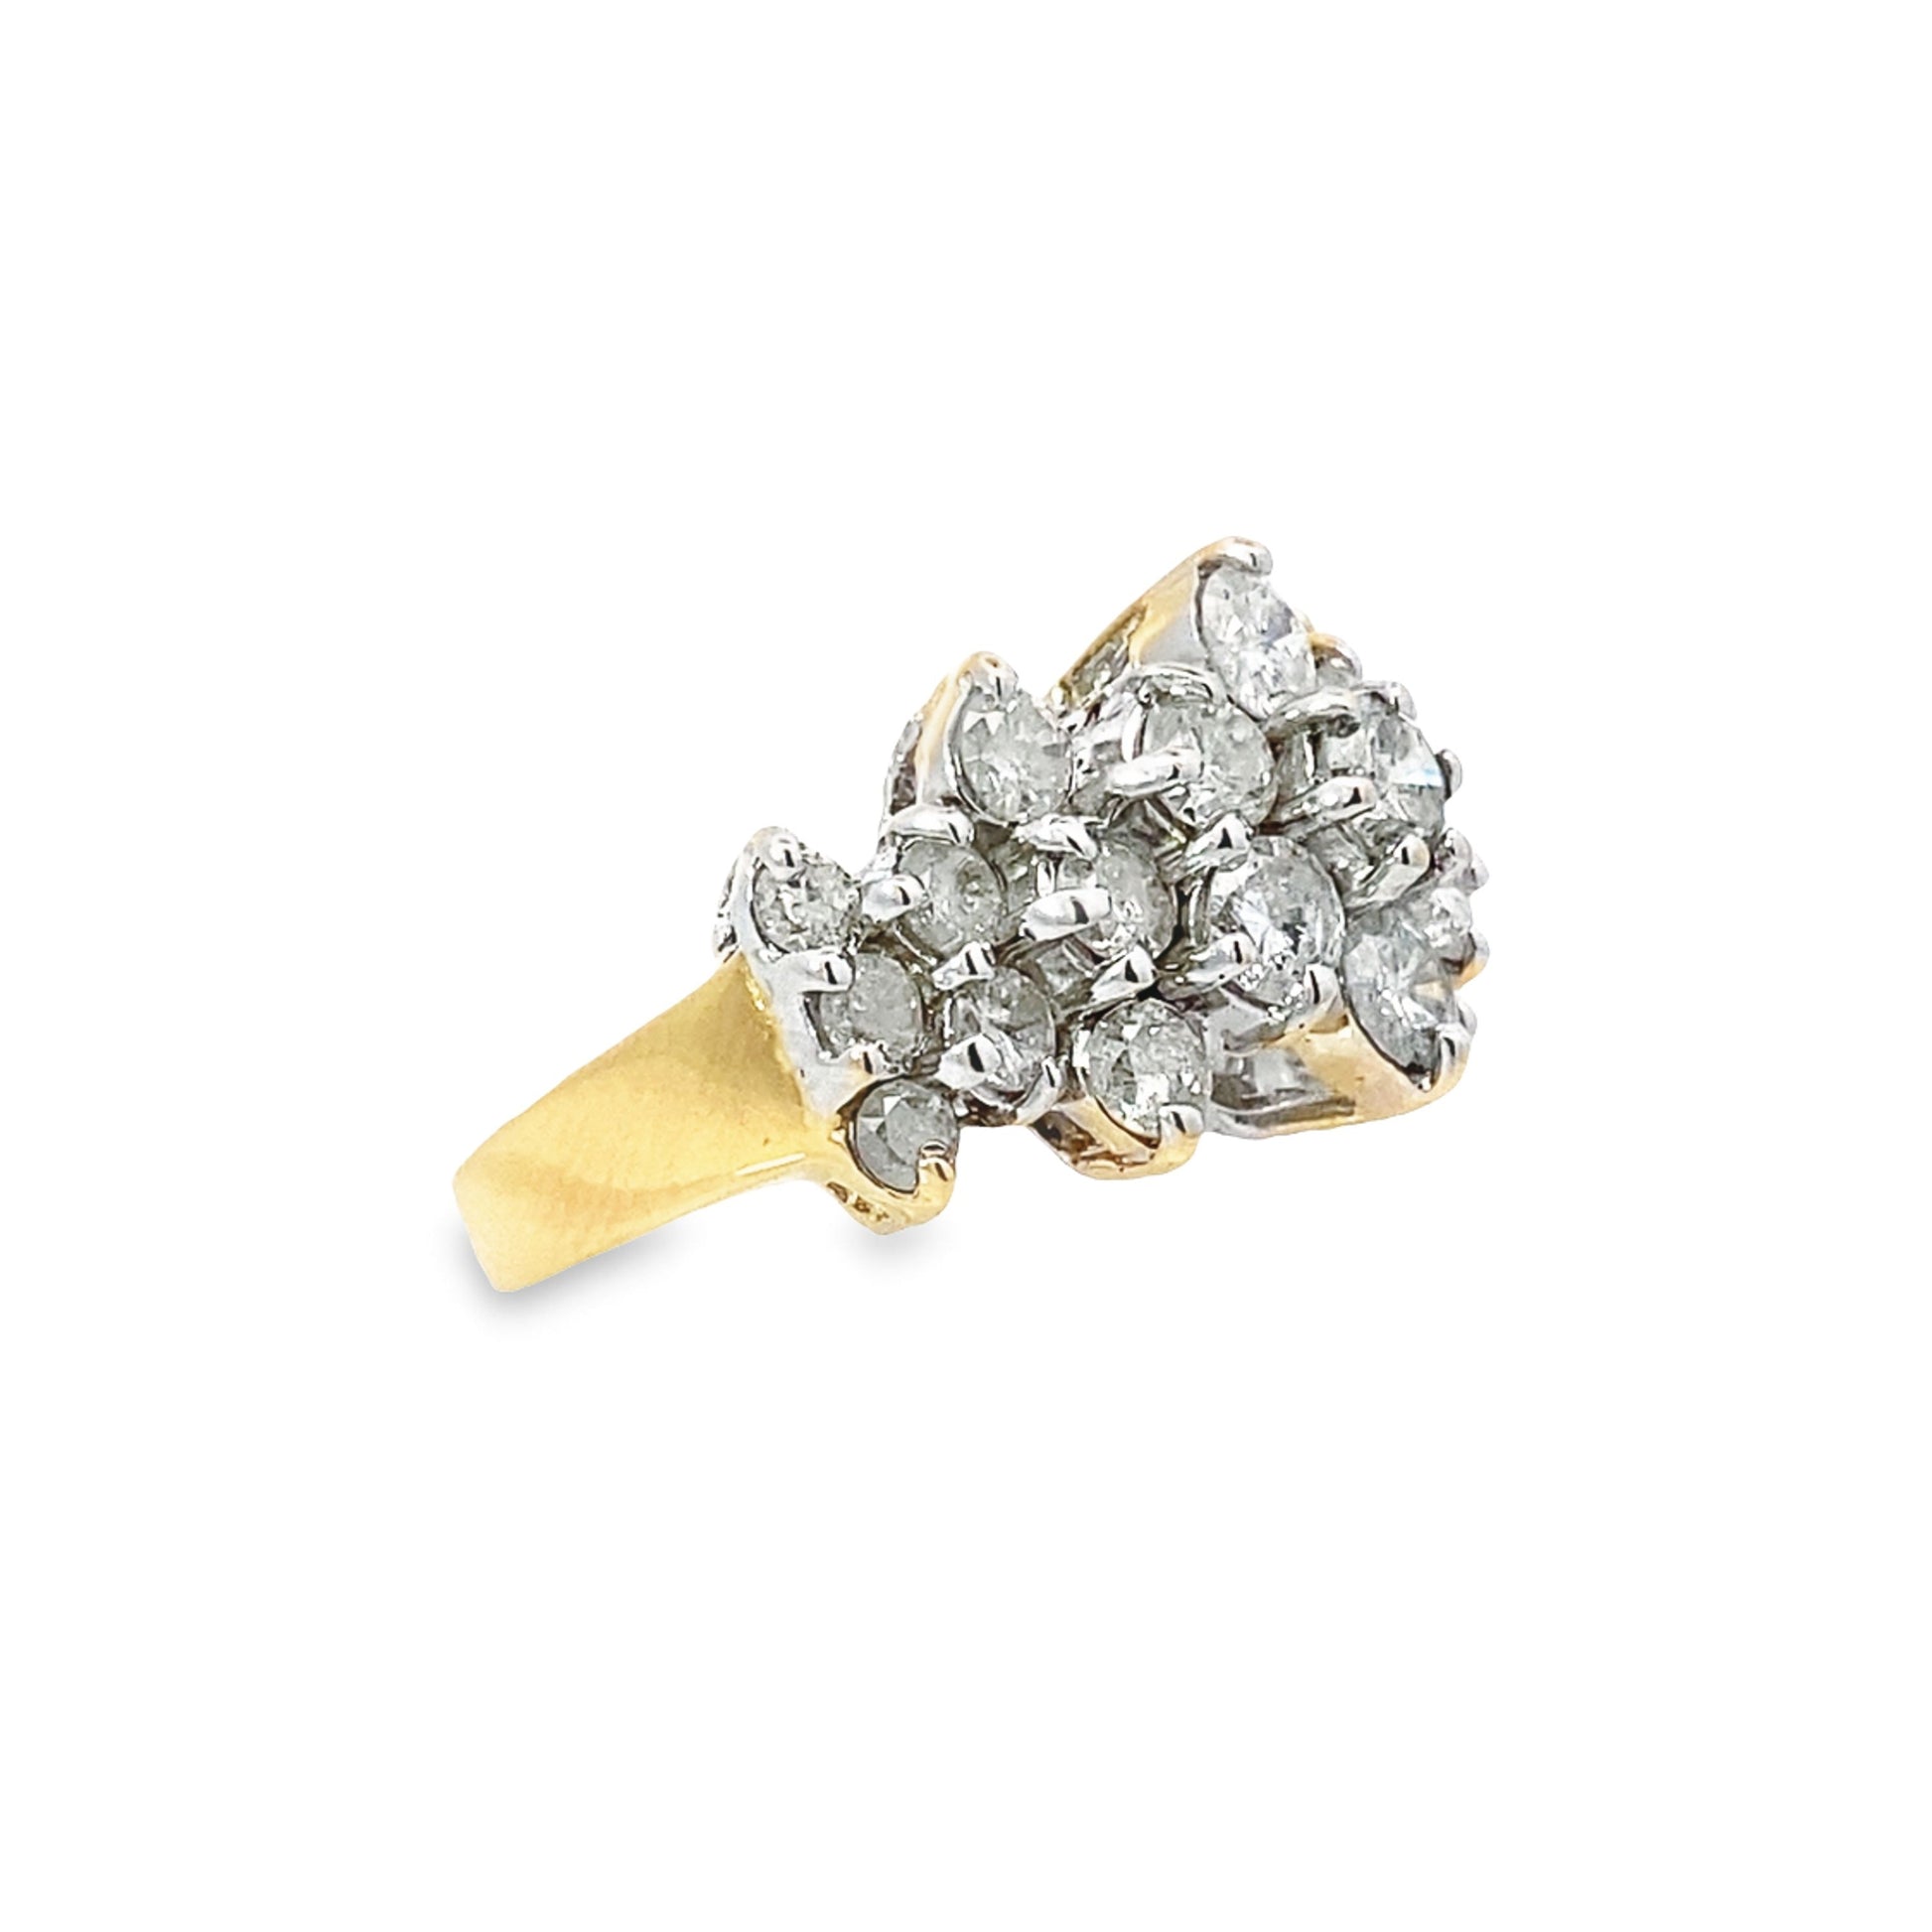 14K Yellow Gold Diamond Fashion Ring Size 7 4.4Dwt